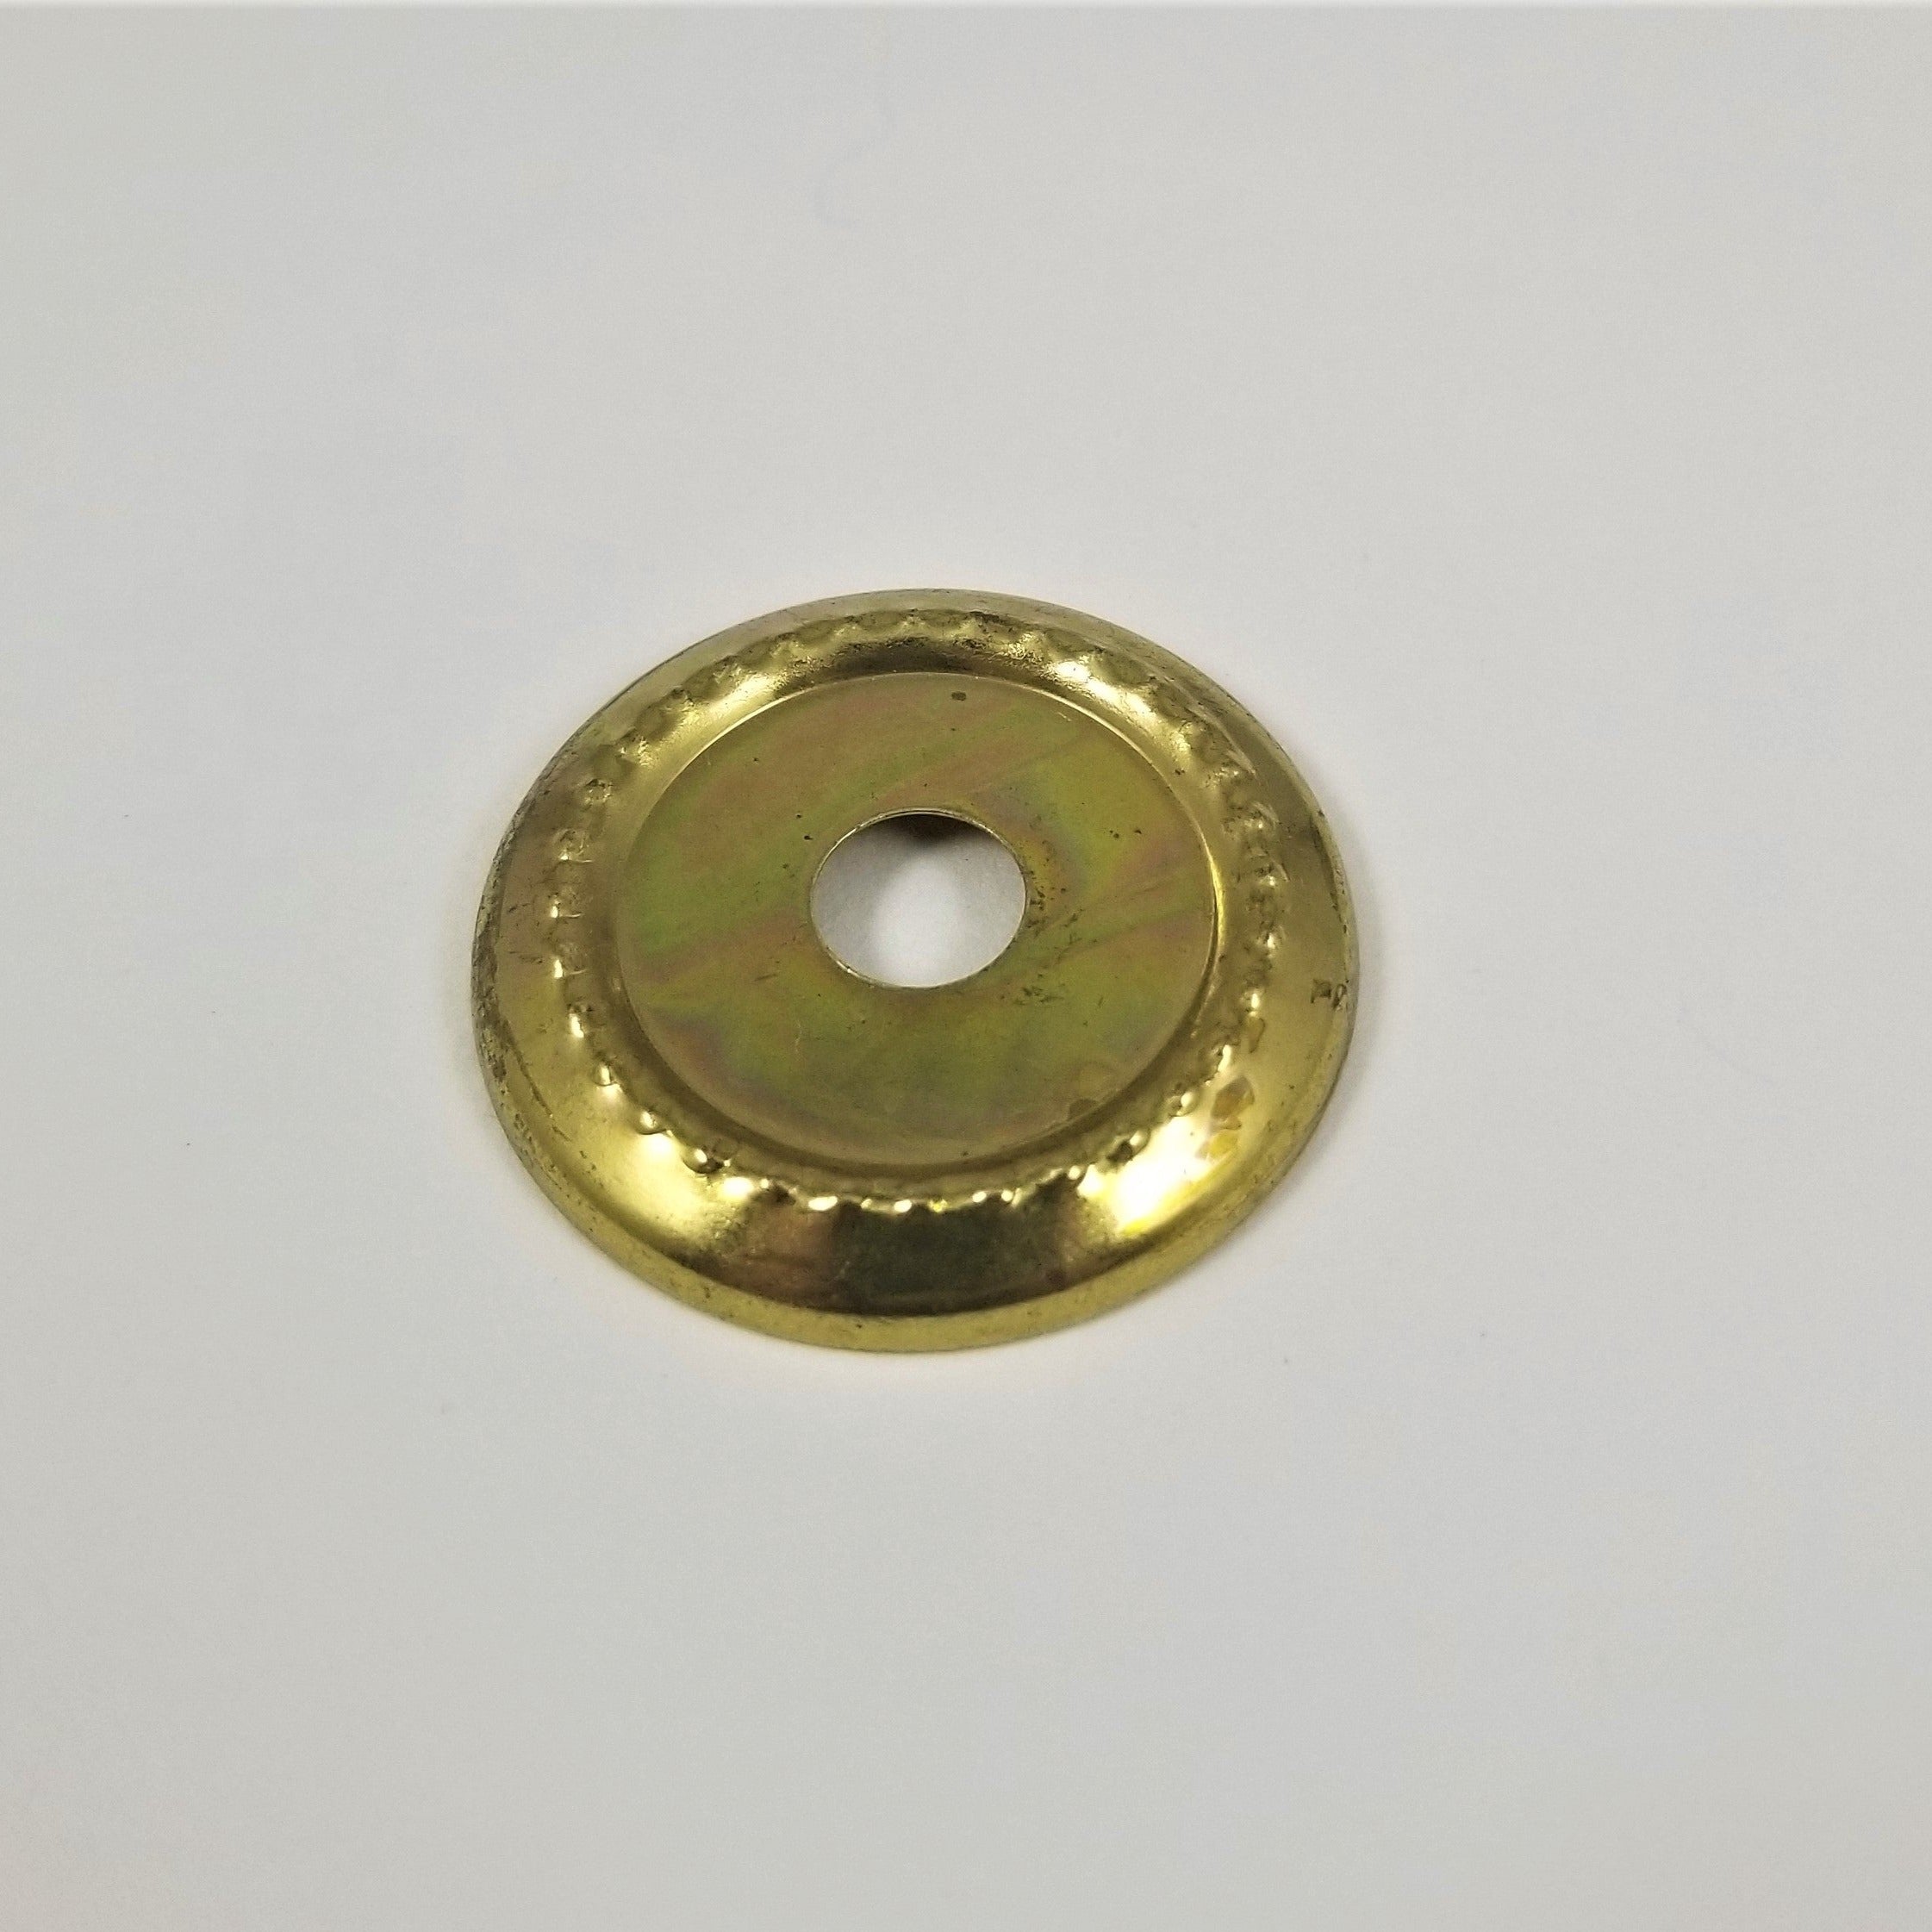 Decorative Hardware - Check Ring - 1/4 slip - Over 1" width